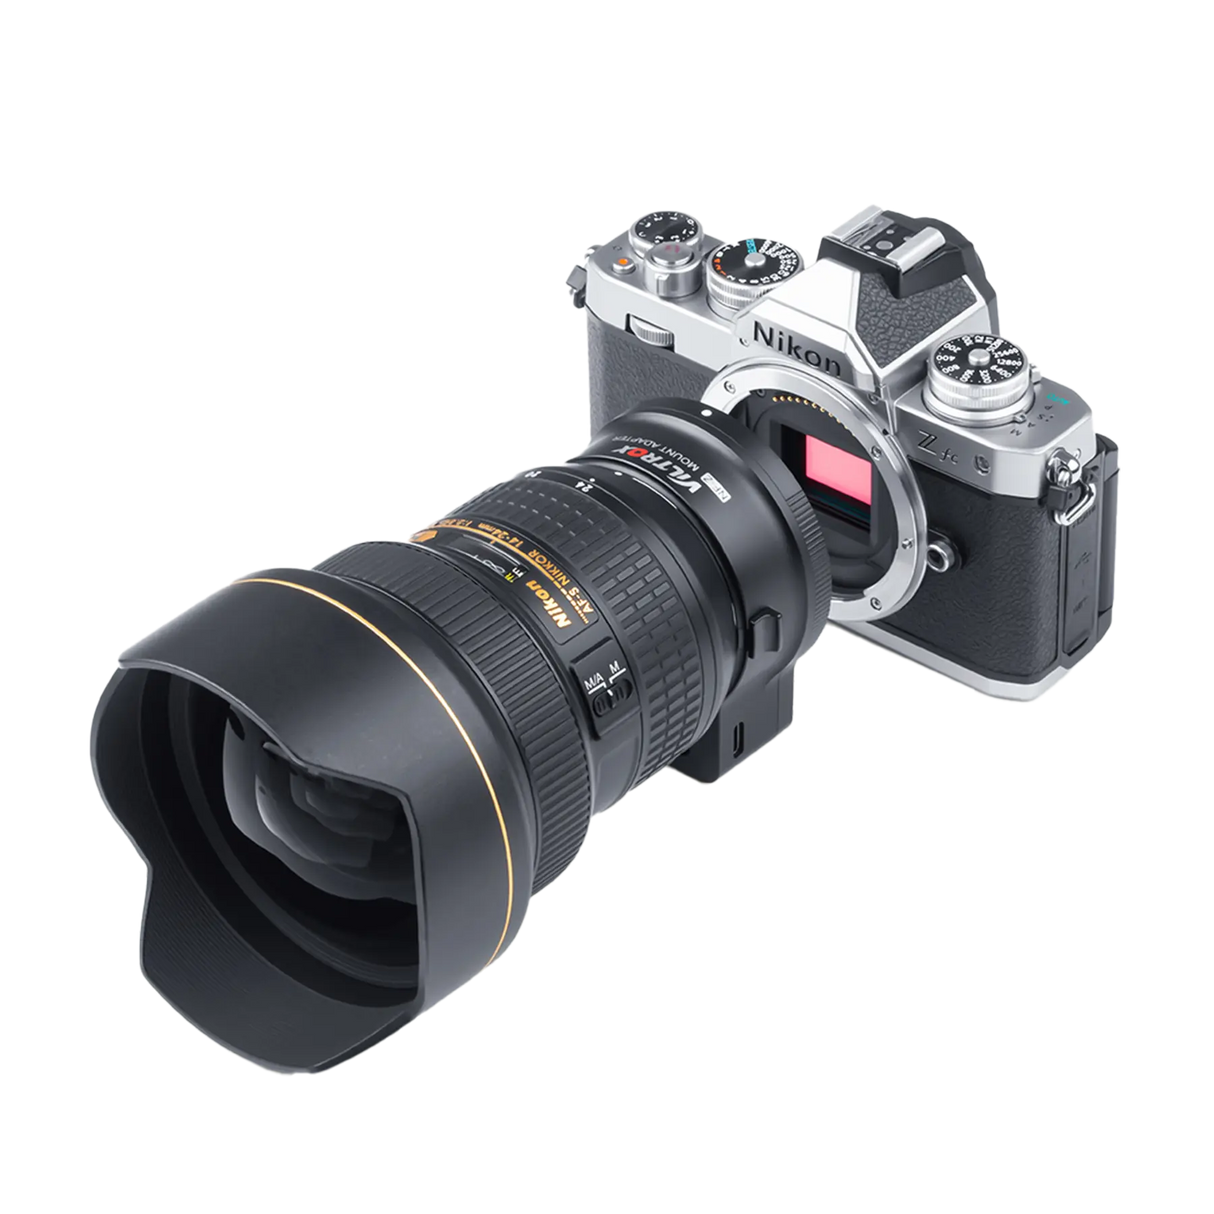 Rollei Objektiv Zubehör NF-Z Adapter für Nikon F-Objektive an Nikon-Z-Mount